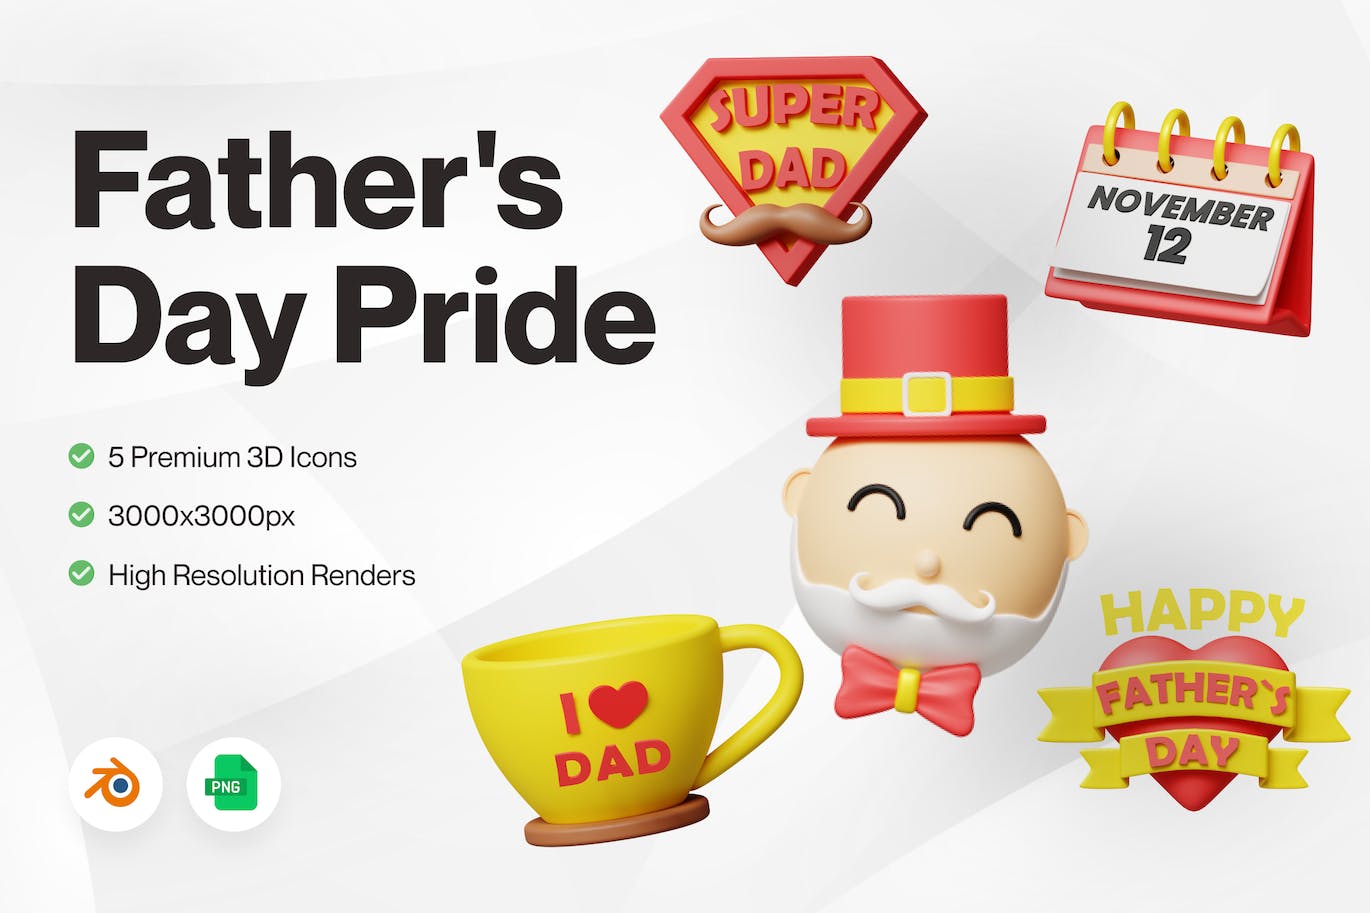 父亲节主题3D图标集 Father’s Day Pride 图标素材 第1张